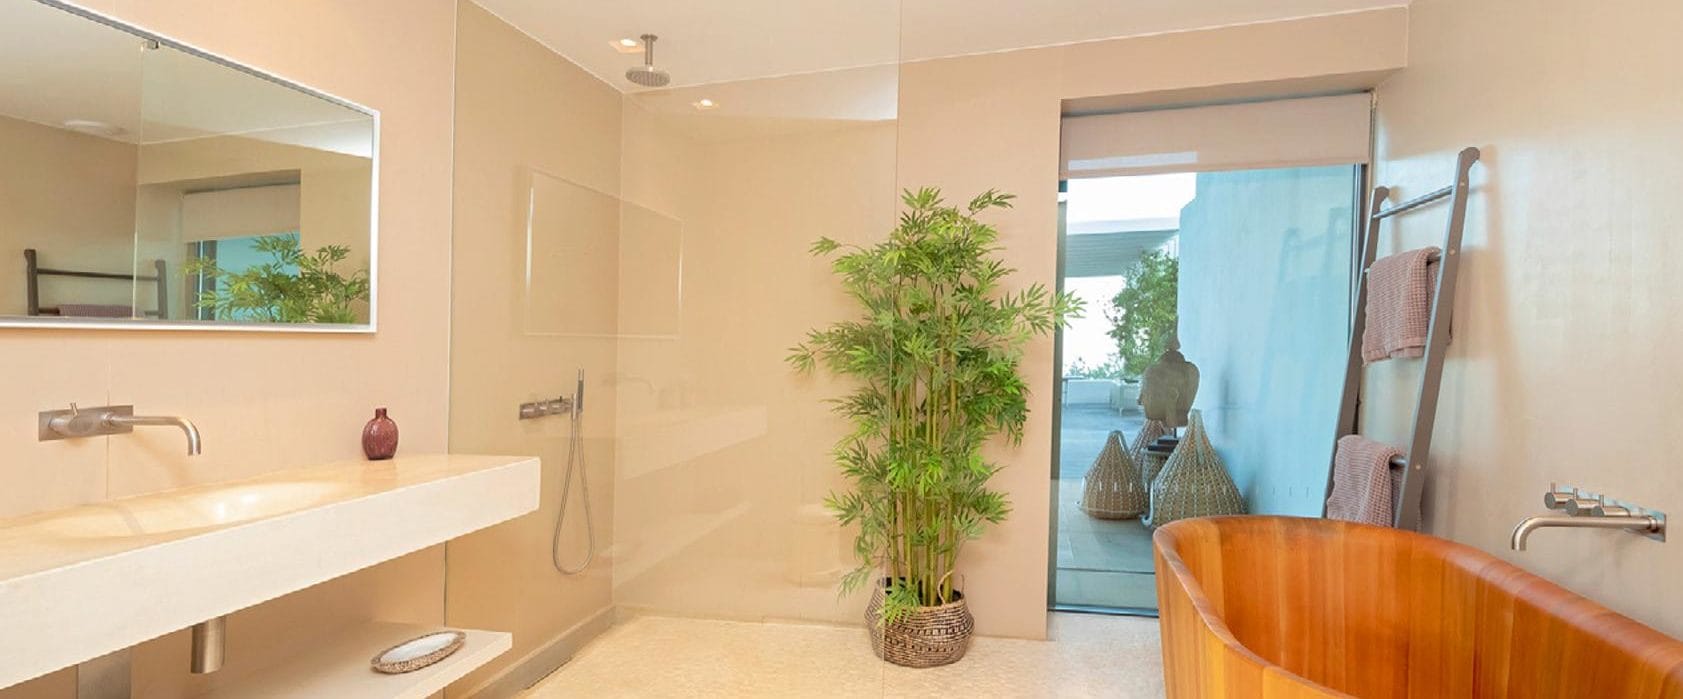 Spacious modern bathroom with walk-in shower and round wooden bathtub